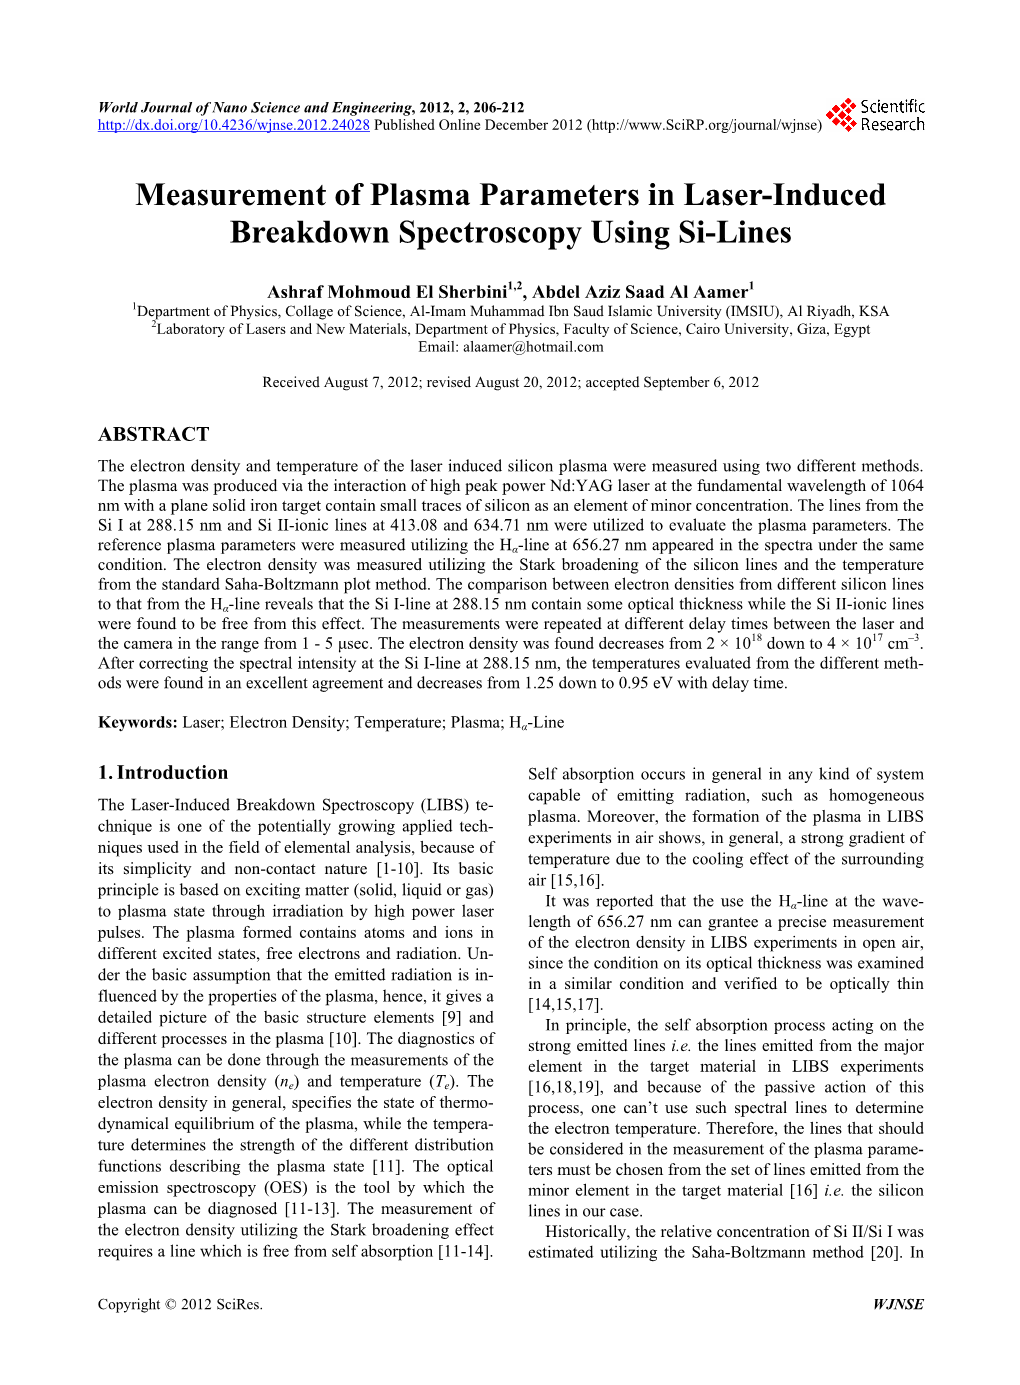 Measurement of Plasma Parameters in Laser-Induced Breakdown Spectroscopy Using Si-Lines